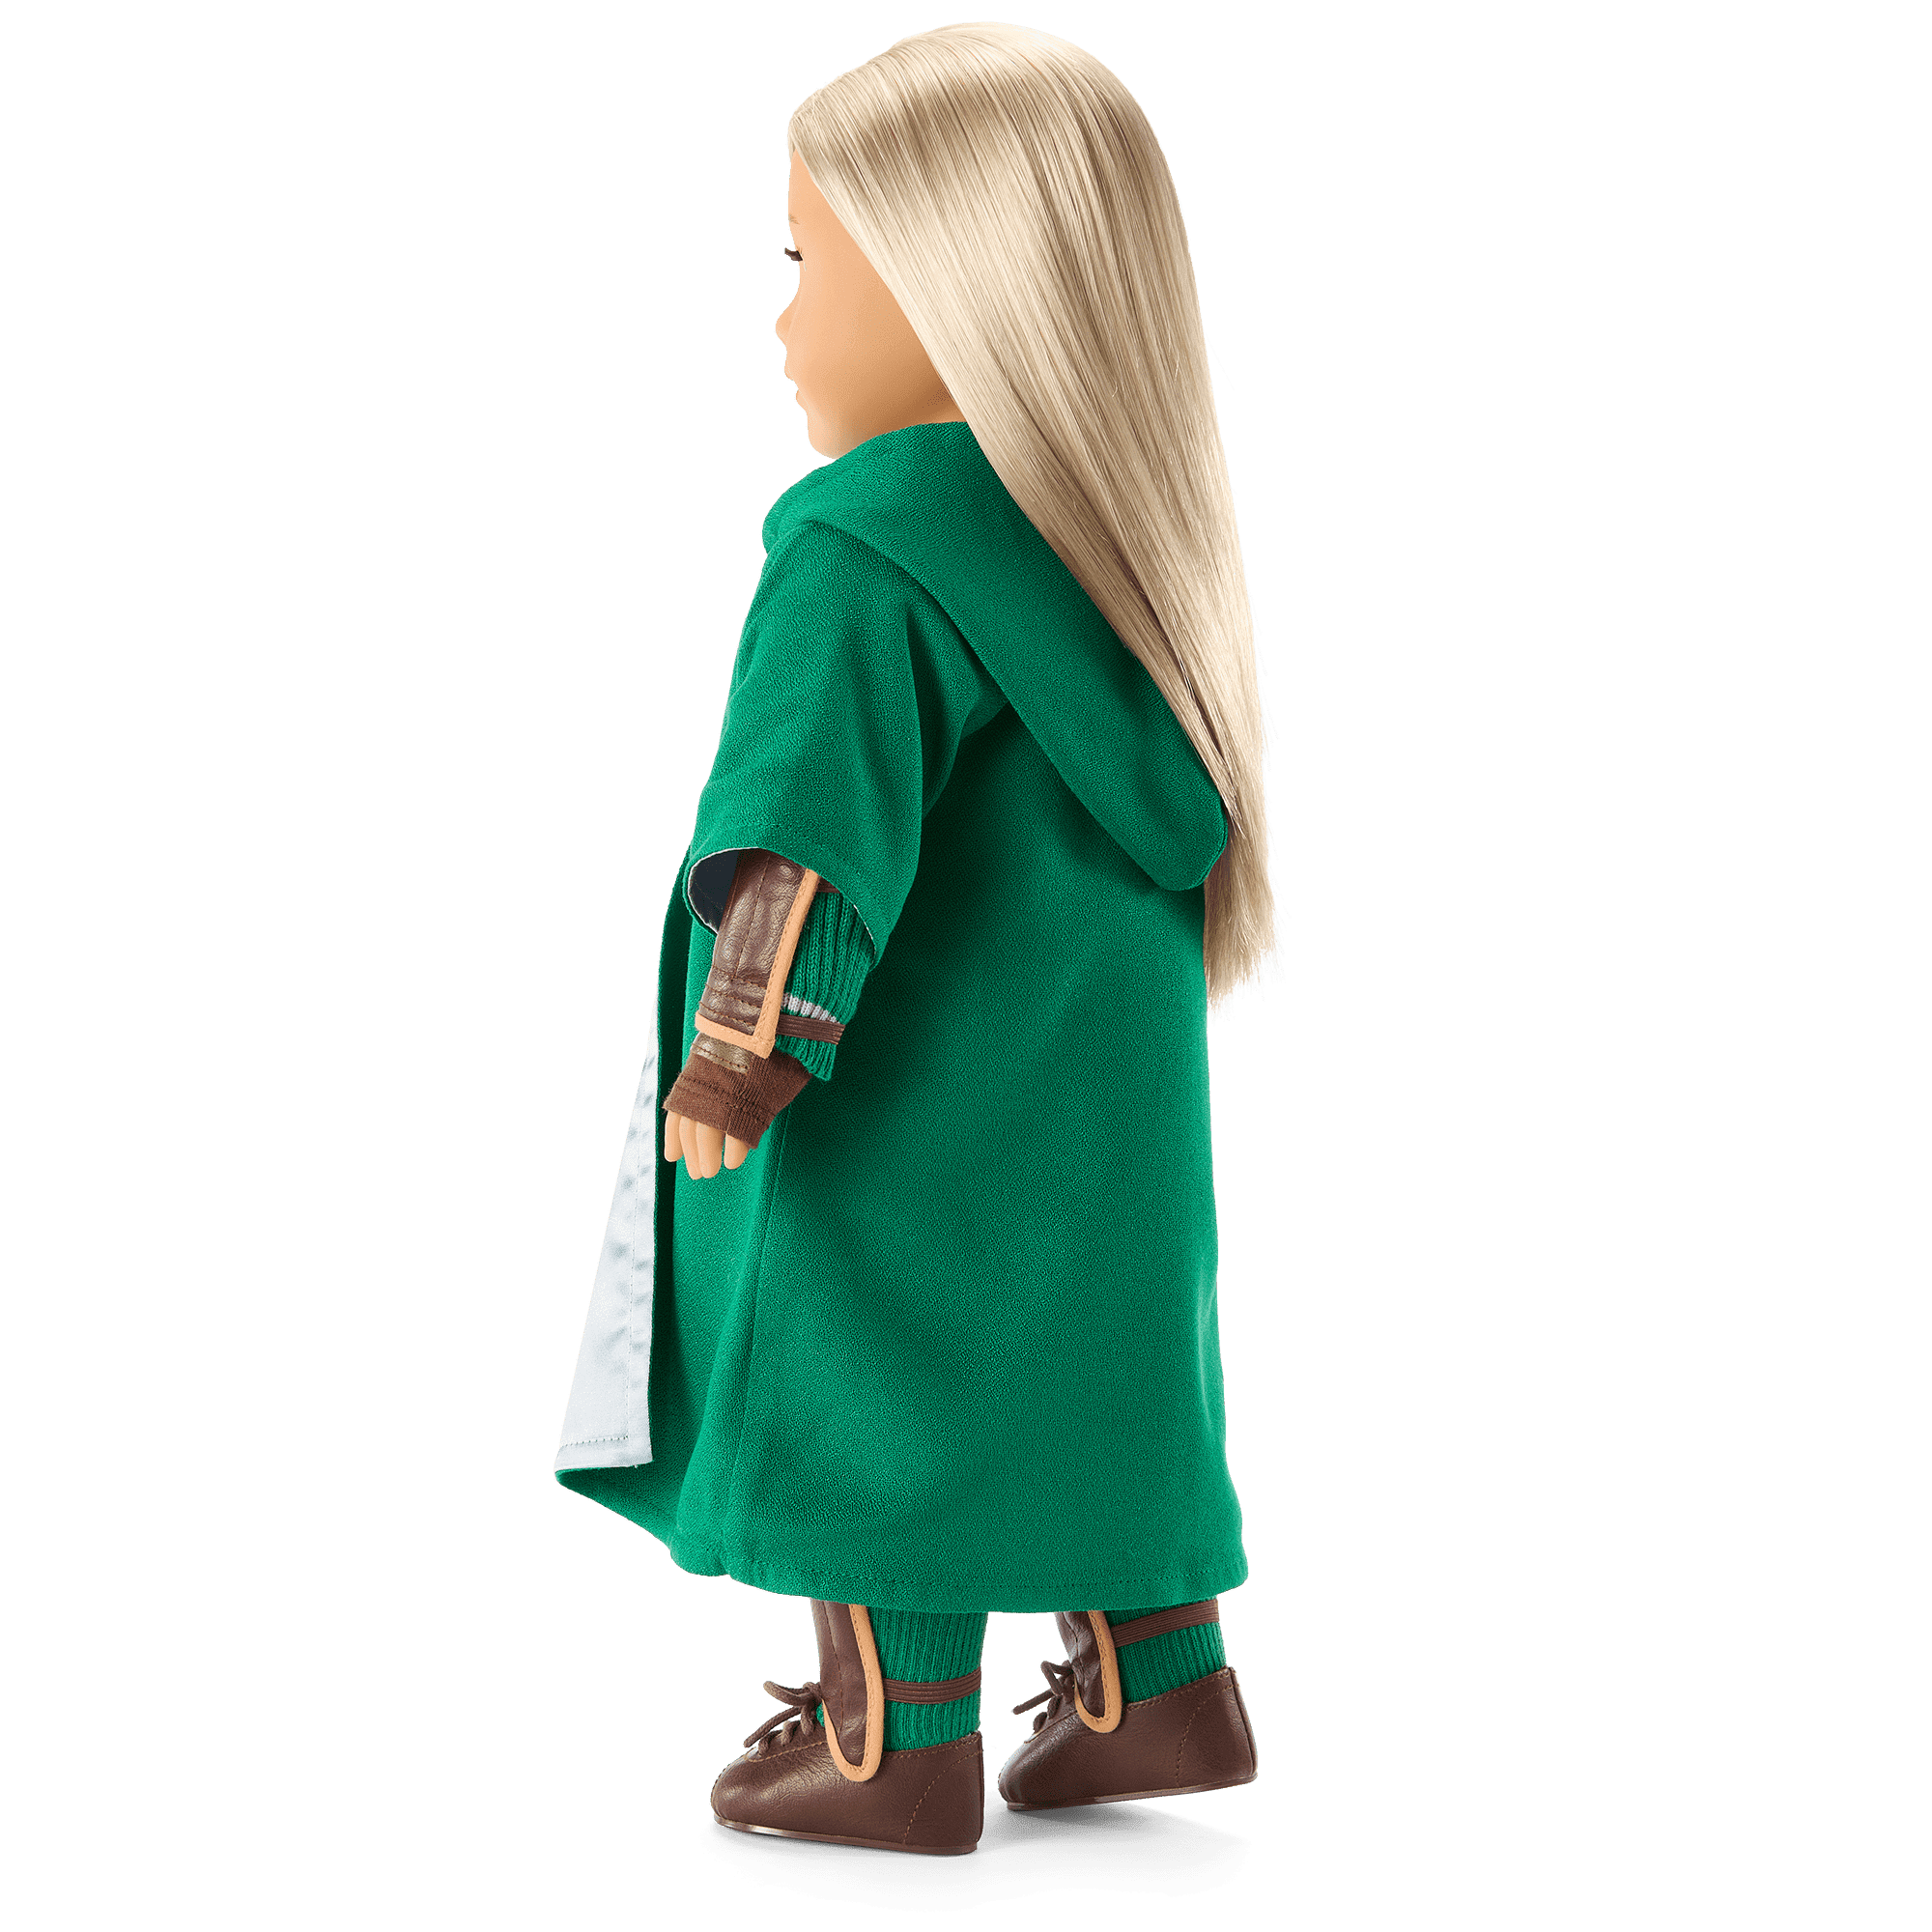 American Girl® Slytherin™ Quidditch™ Uniform for 18-inch Dolls